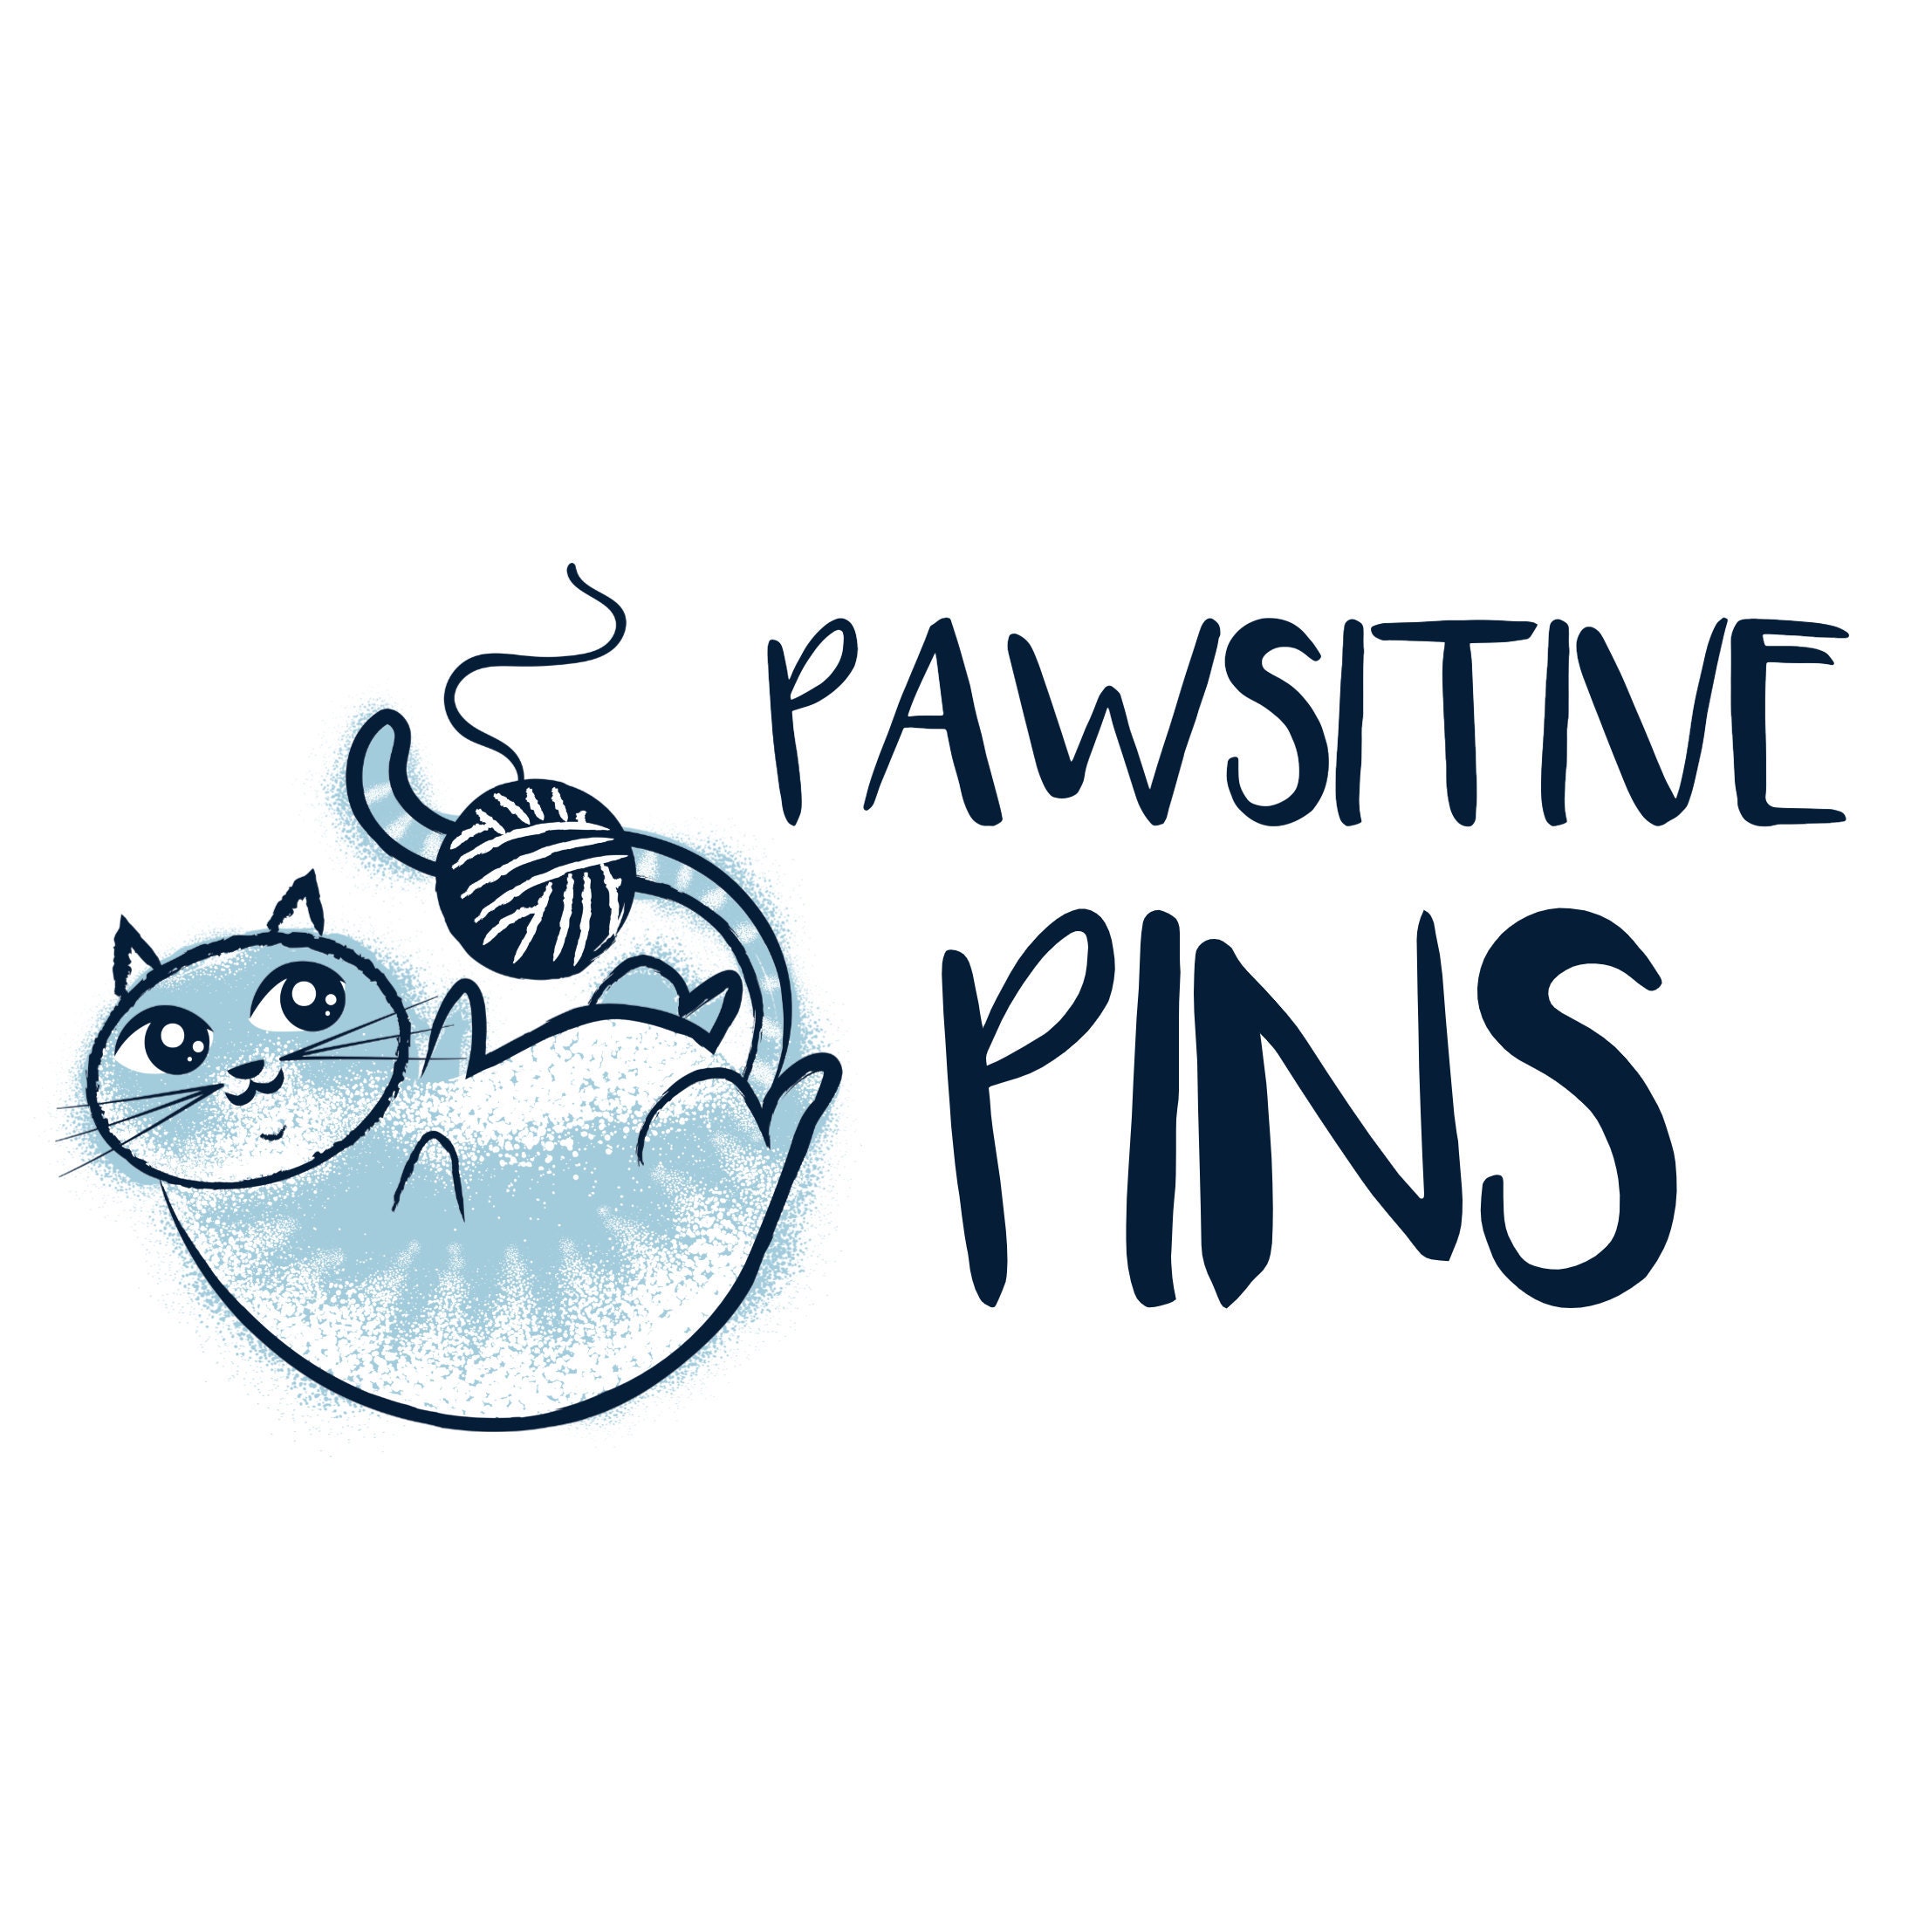 Pin on cute items ♡